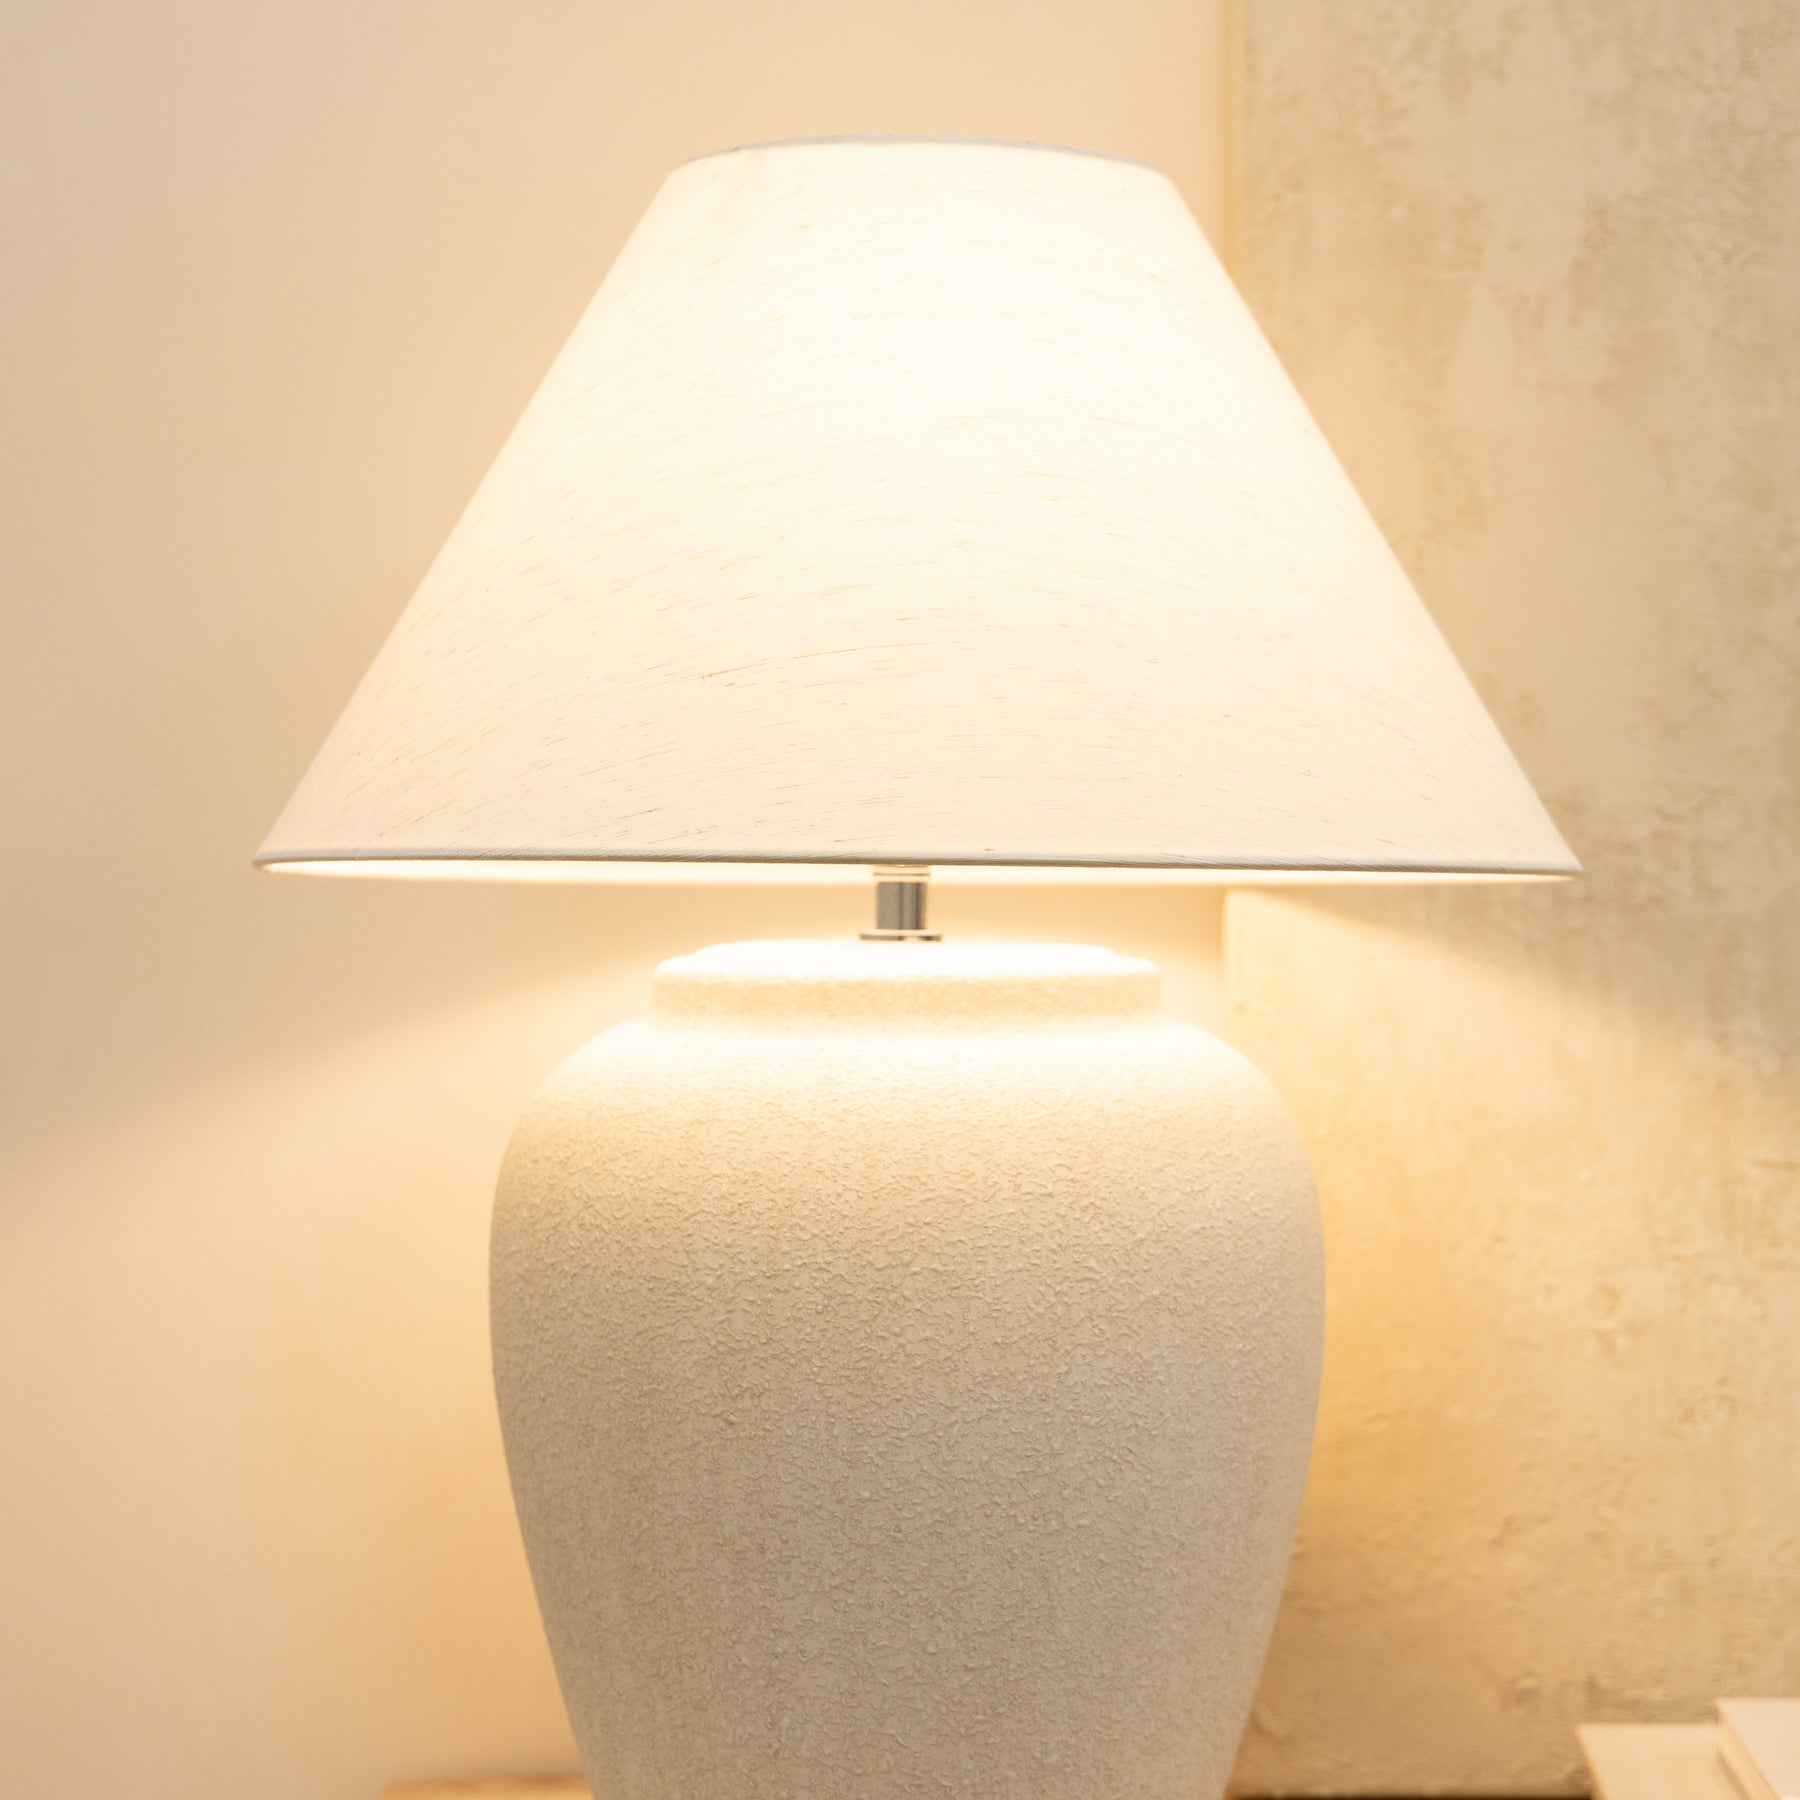 Detail shot of Stone Ceramic Coolie Shade Table Lamp emitting warm lighting